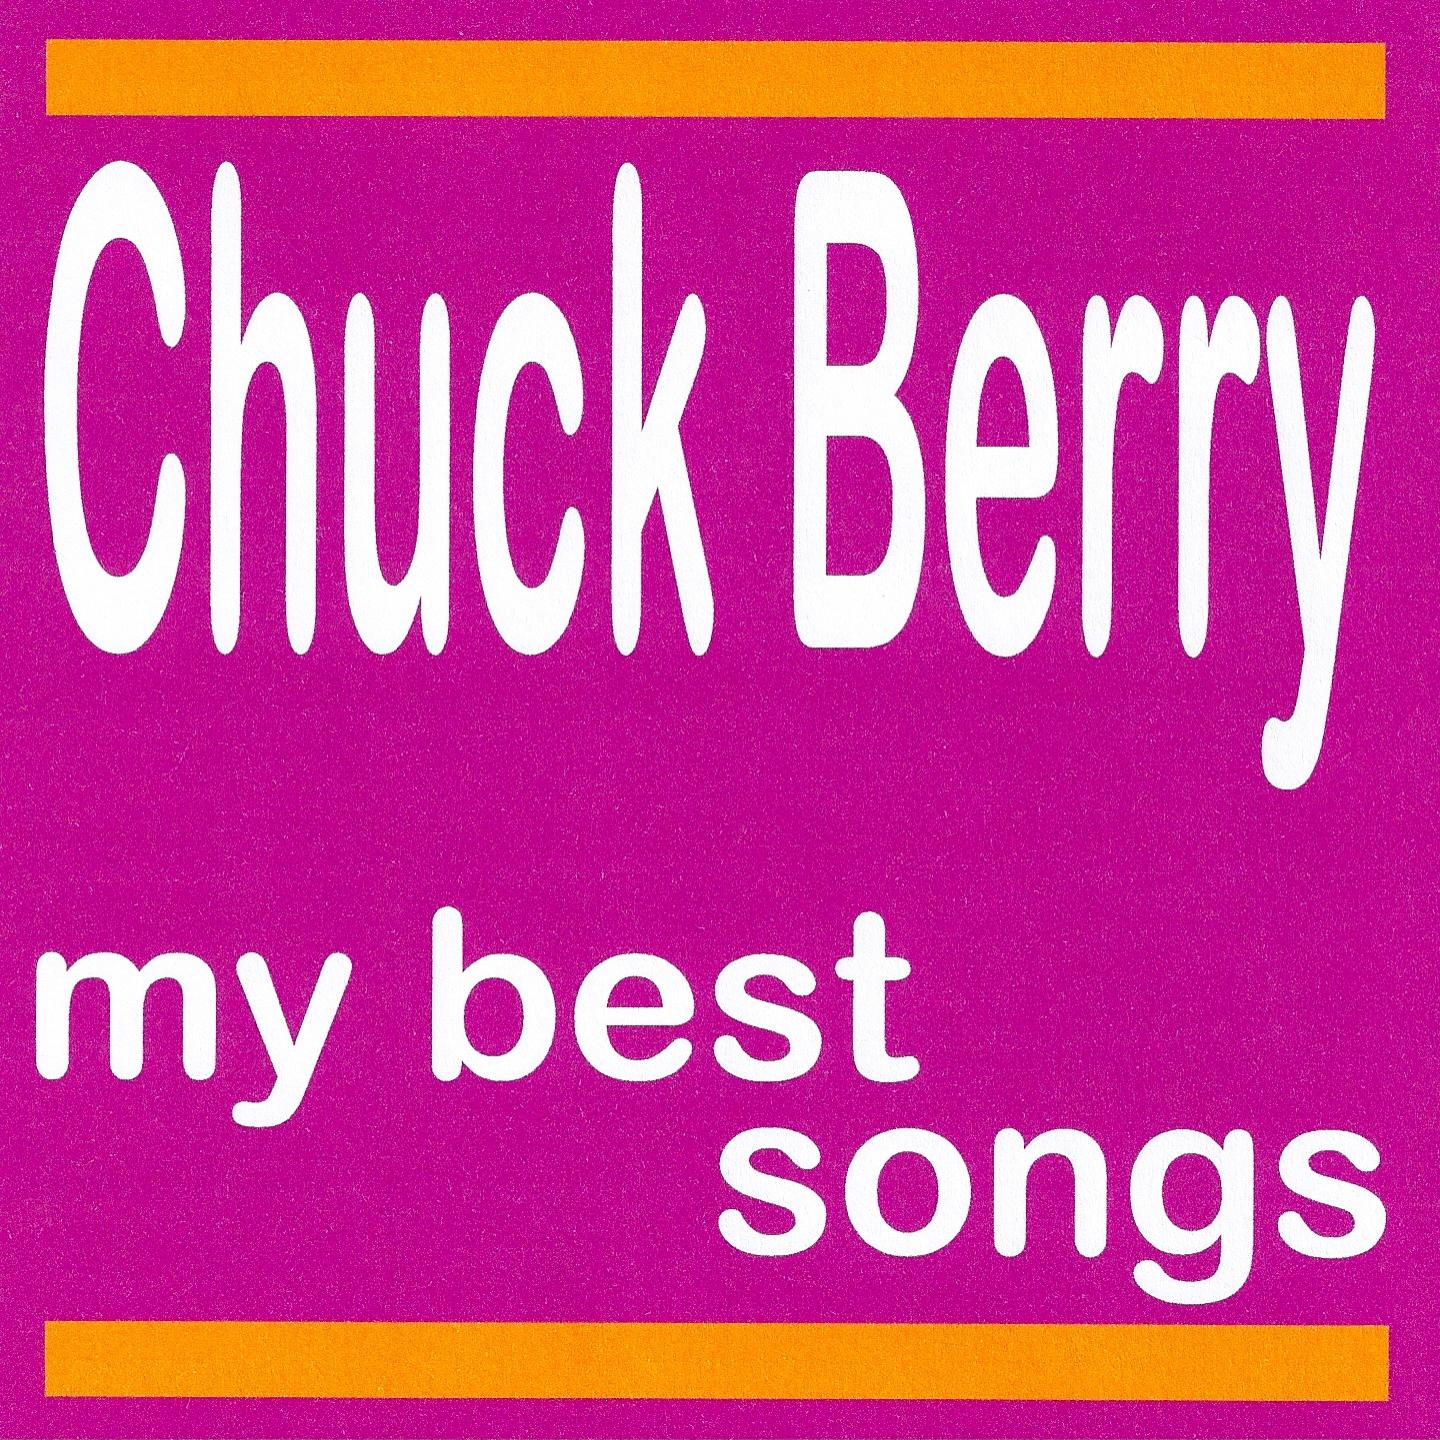 My Best Songs - Chuck Berry